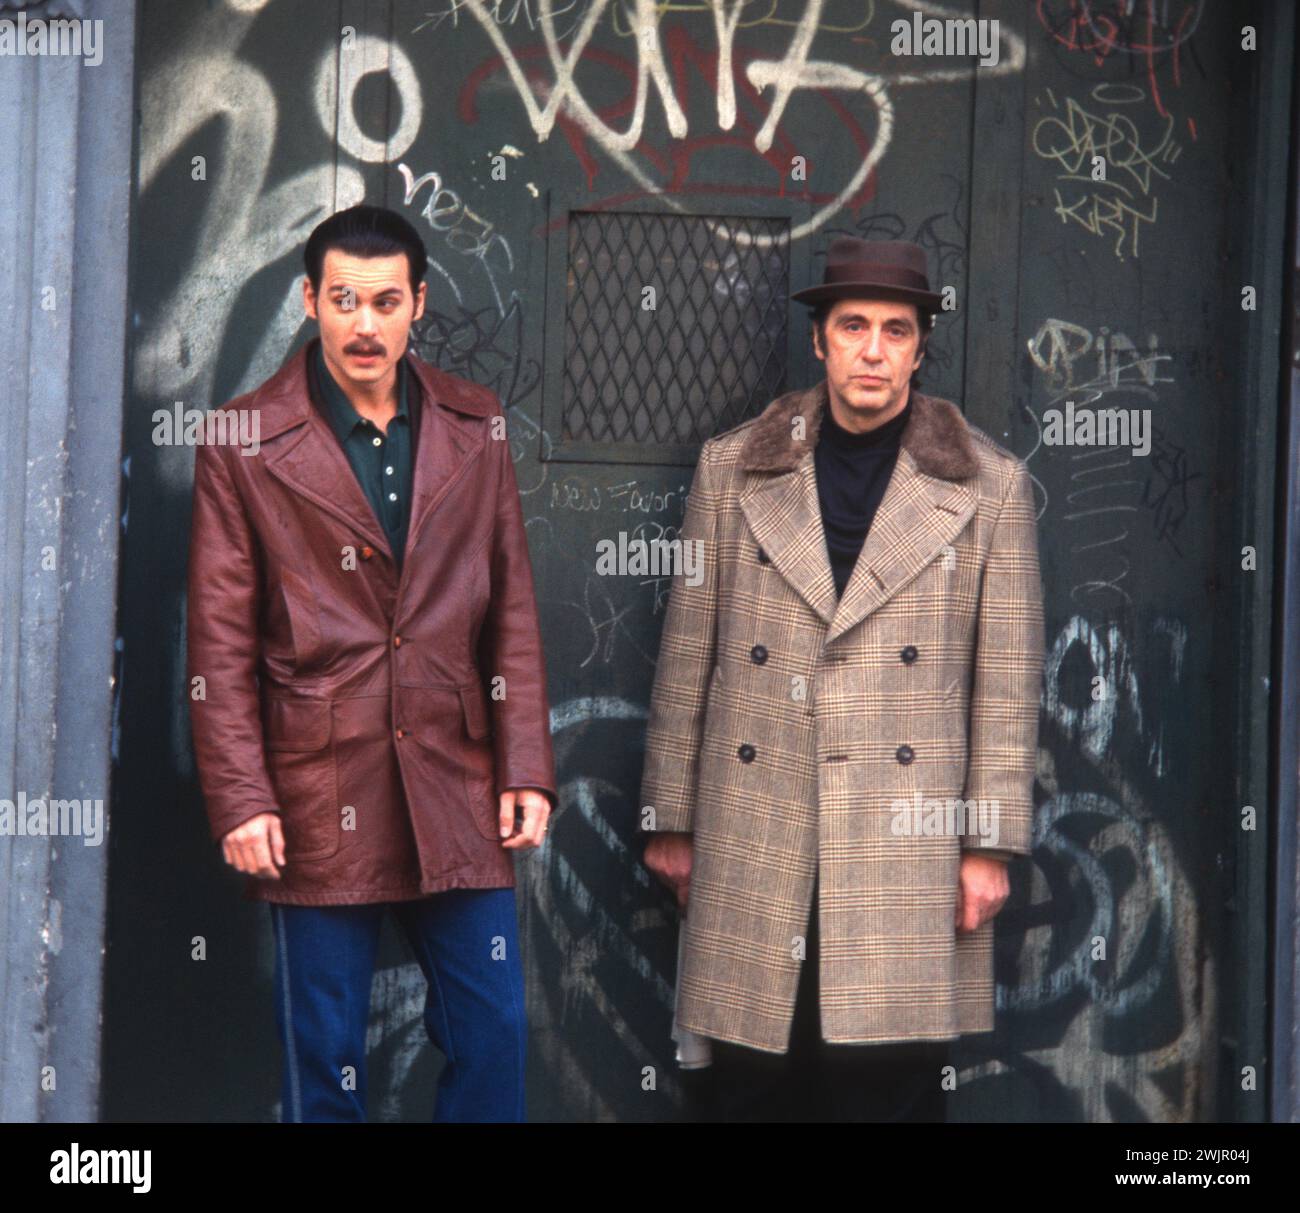 1996Johnny Depp Al Pacino On the movie set of Donnie Brasco in NYC John Barrett/PHOTOlink / MediaPunch Stock Photo